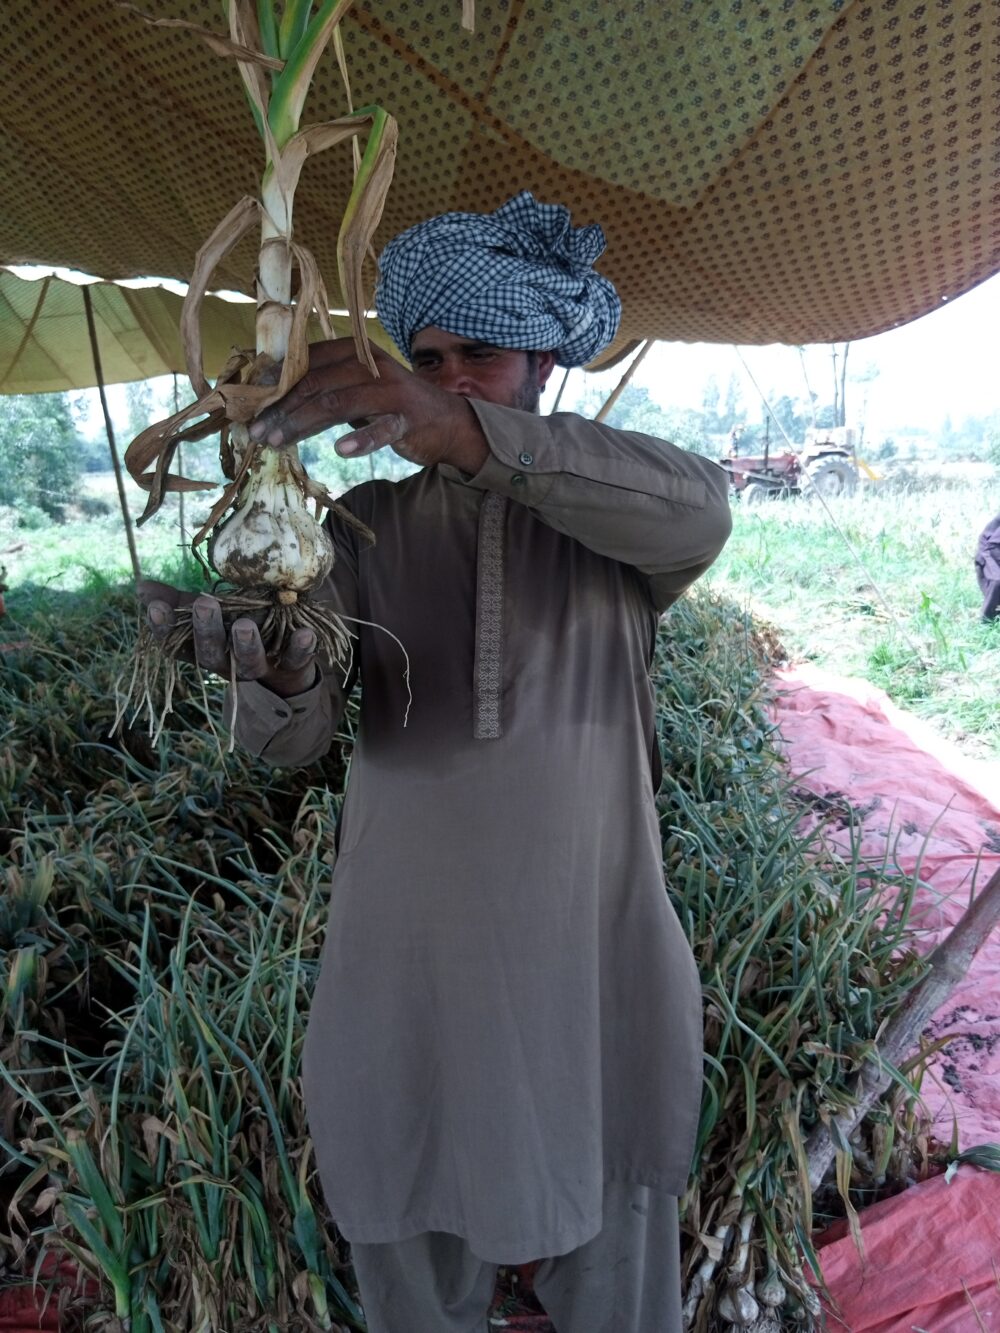 G1 garlic in Pakistan